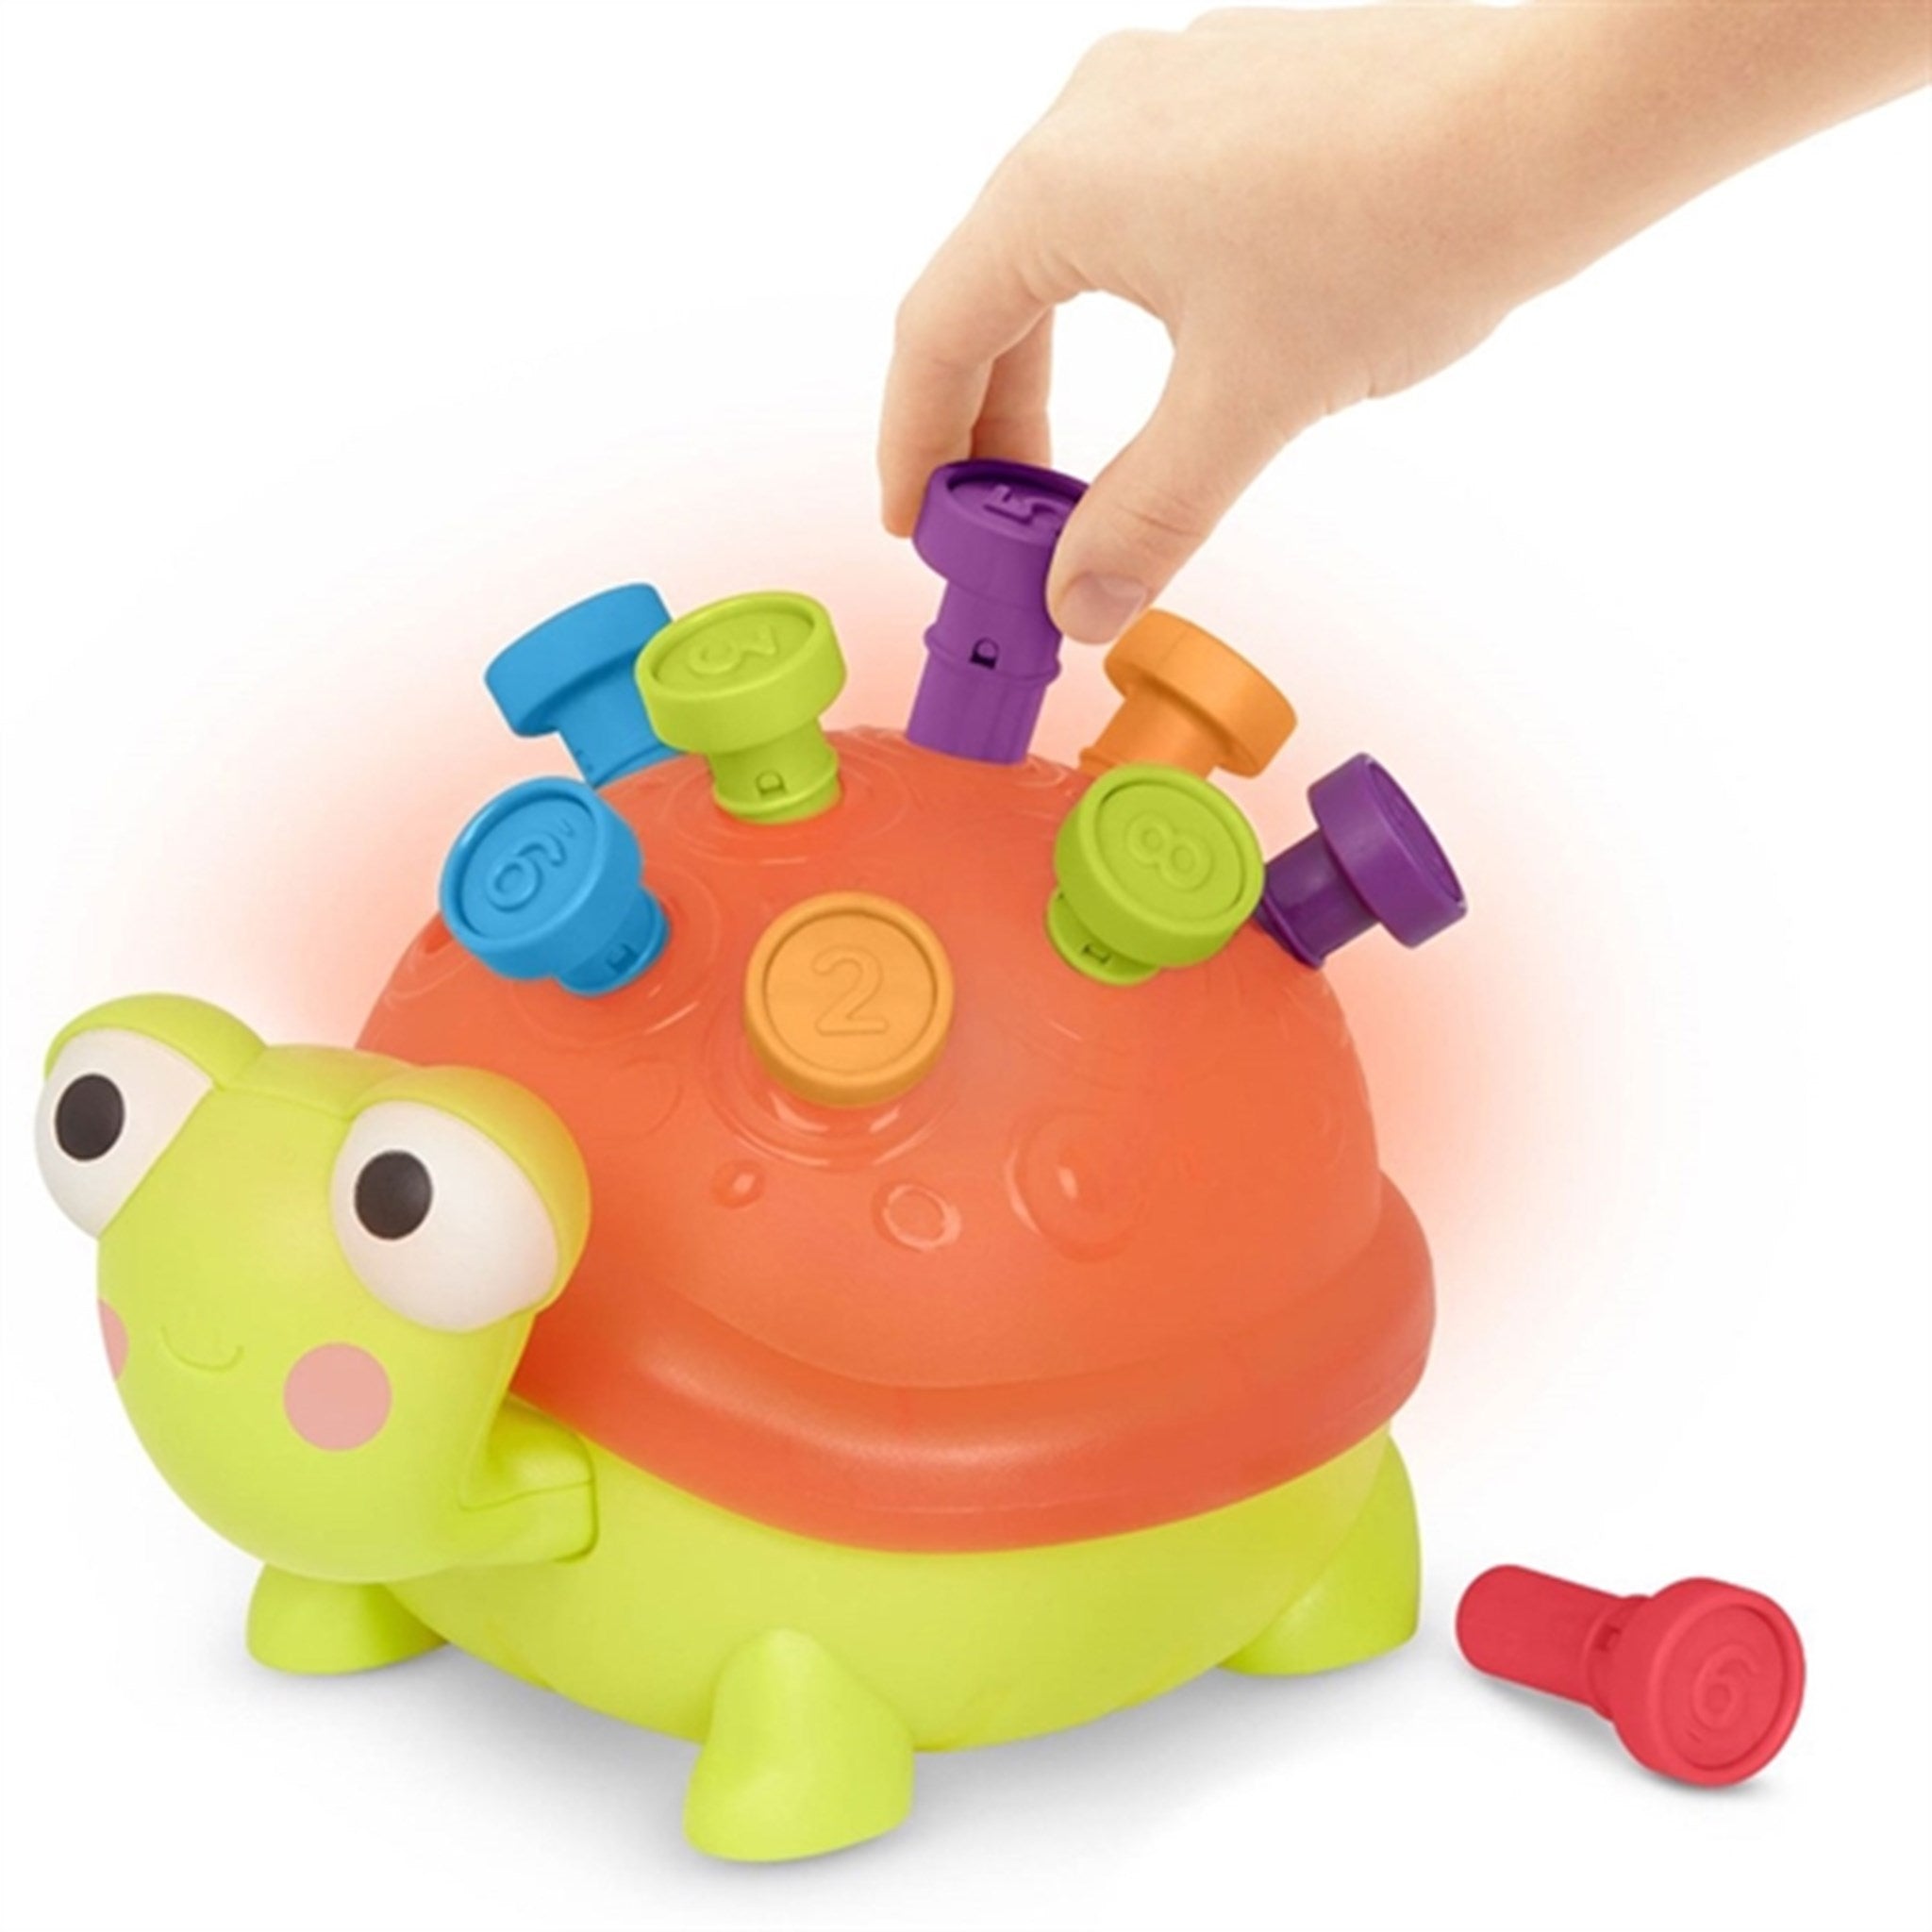 B-toys Teaching Turtle 3